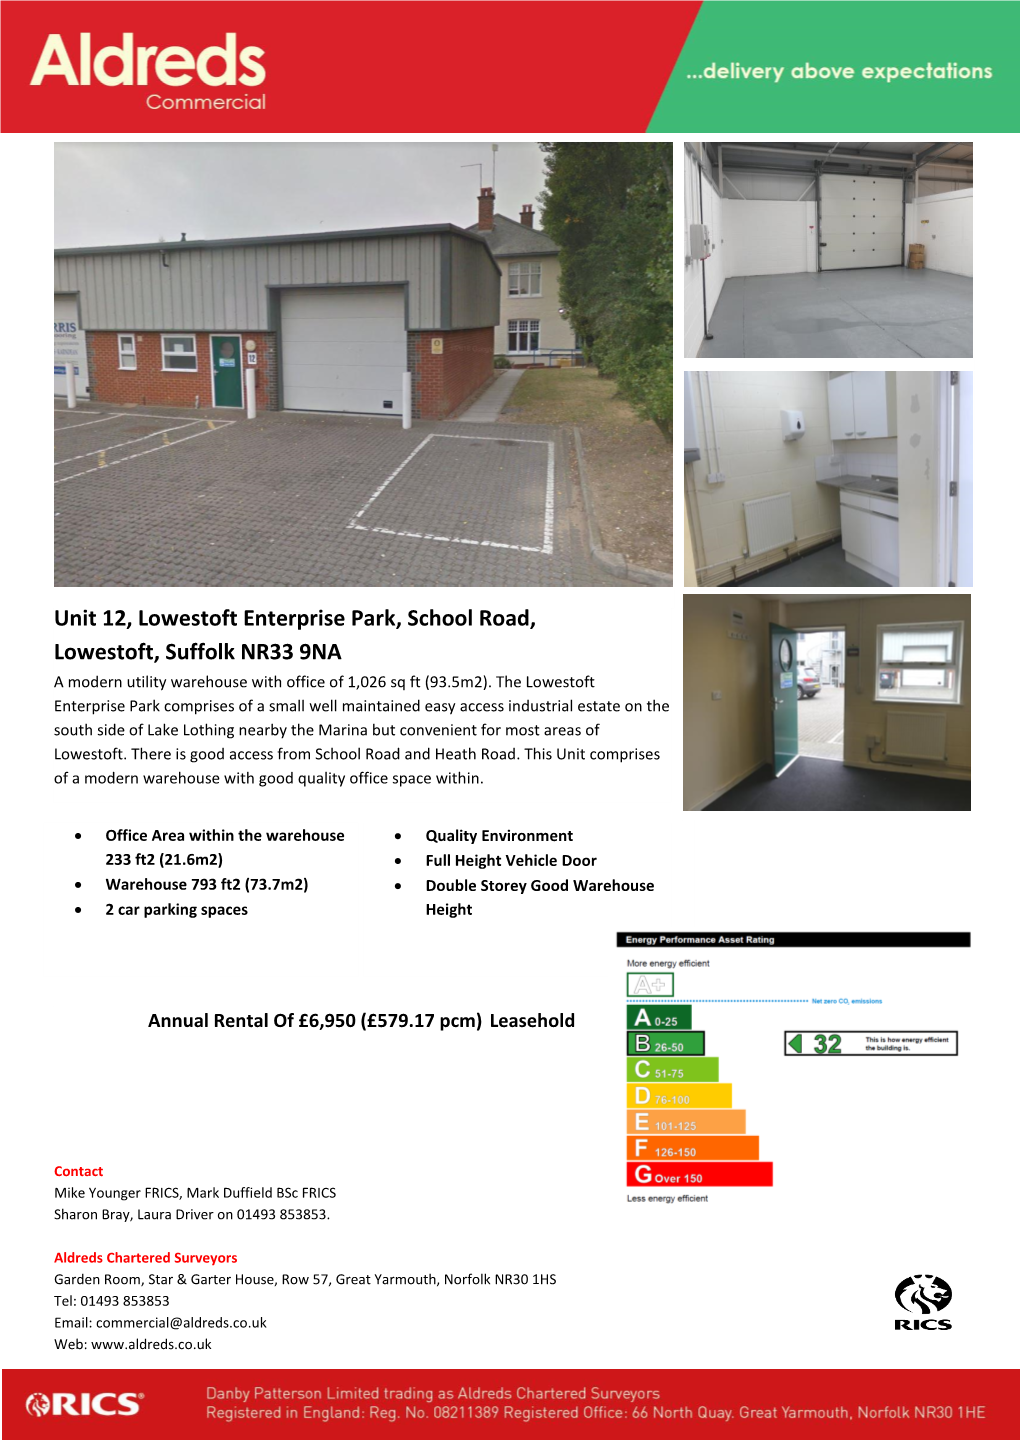 Unit 12, Lowestoft Enterprise Park, School Road, Lowestoft, Suffolk NR33 9NA a Modern Utility Warehouse with Office of 1,026 Sq Ft (93.5M2)